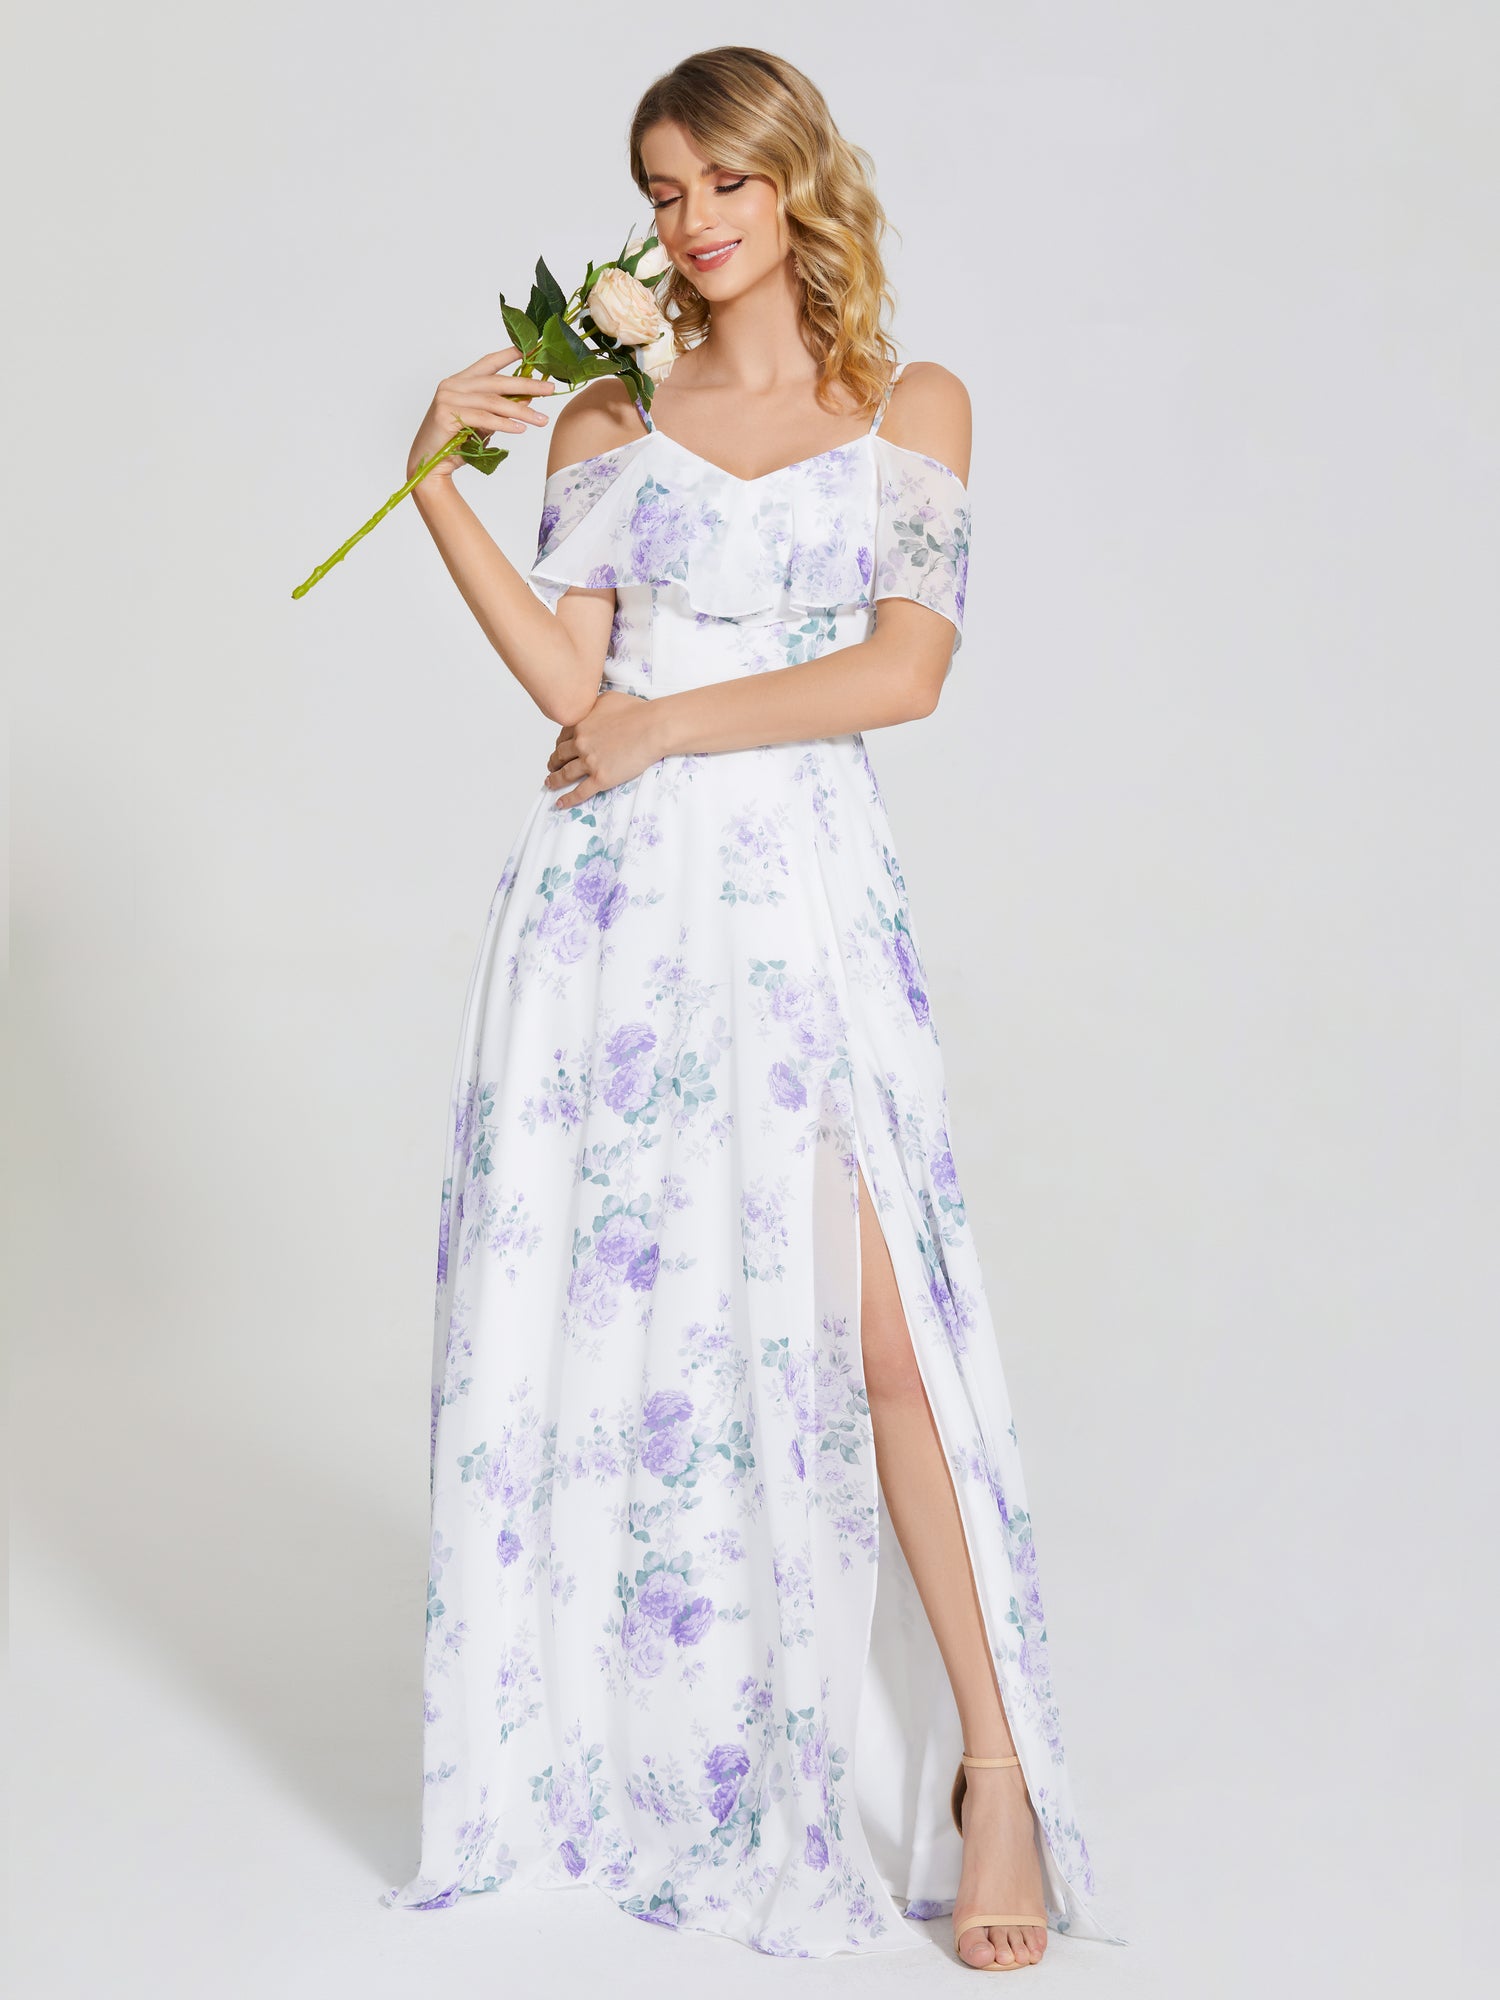 Floral Bridesmaid Dresses